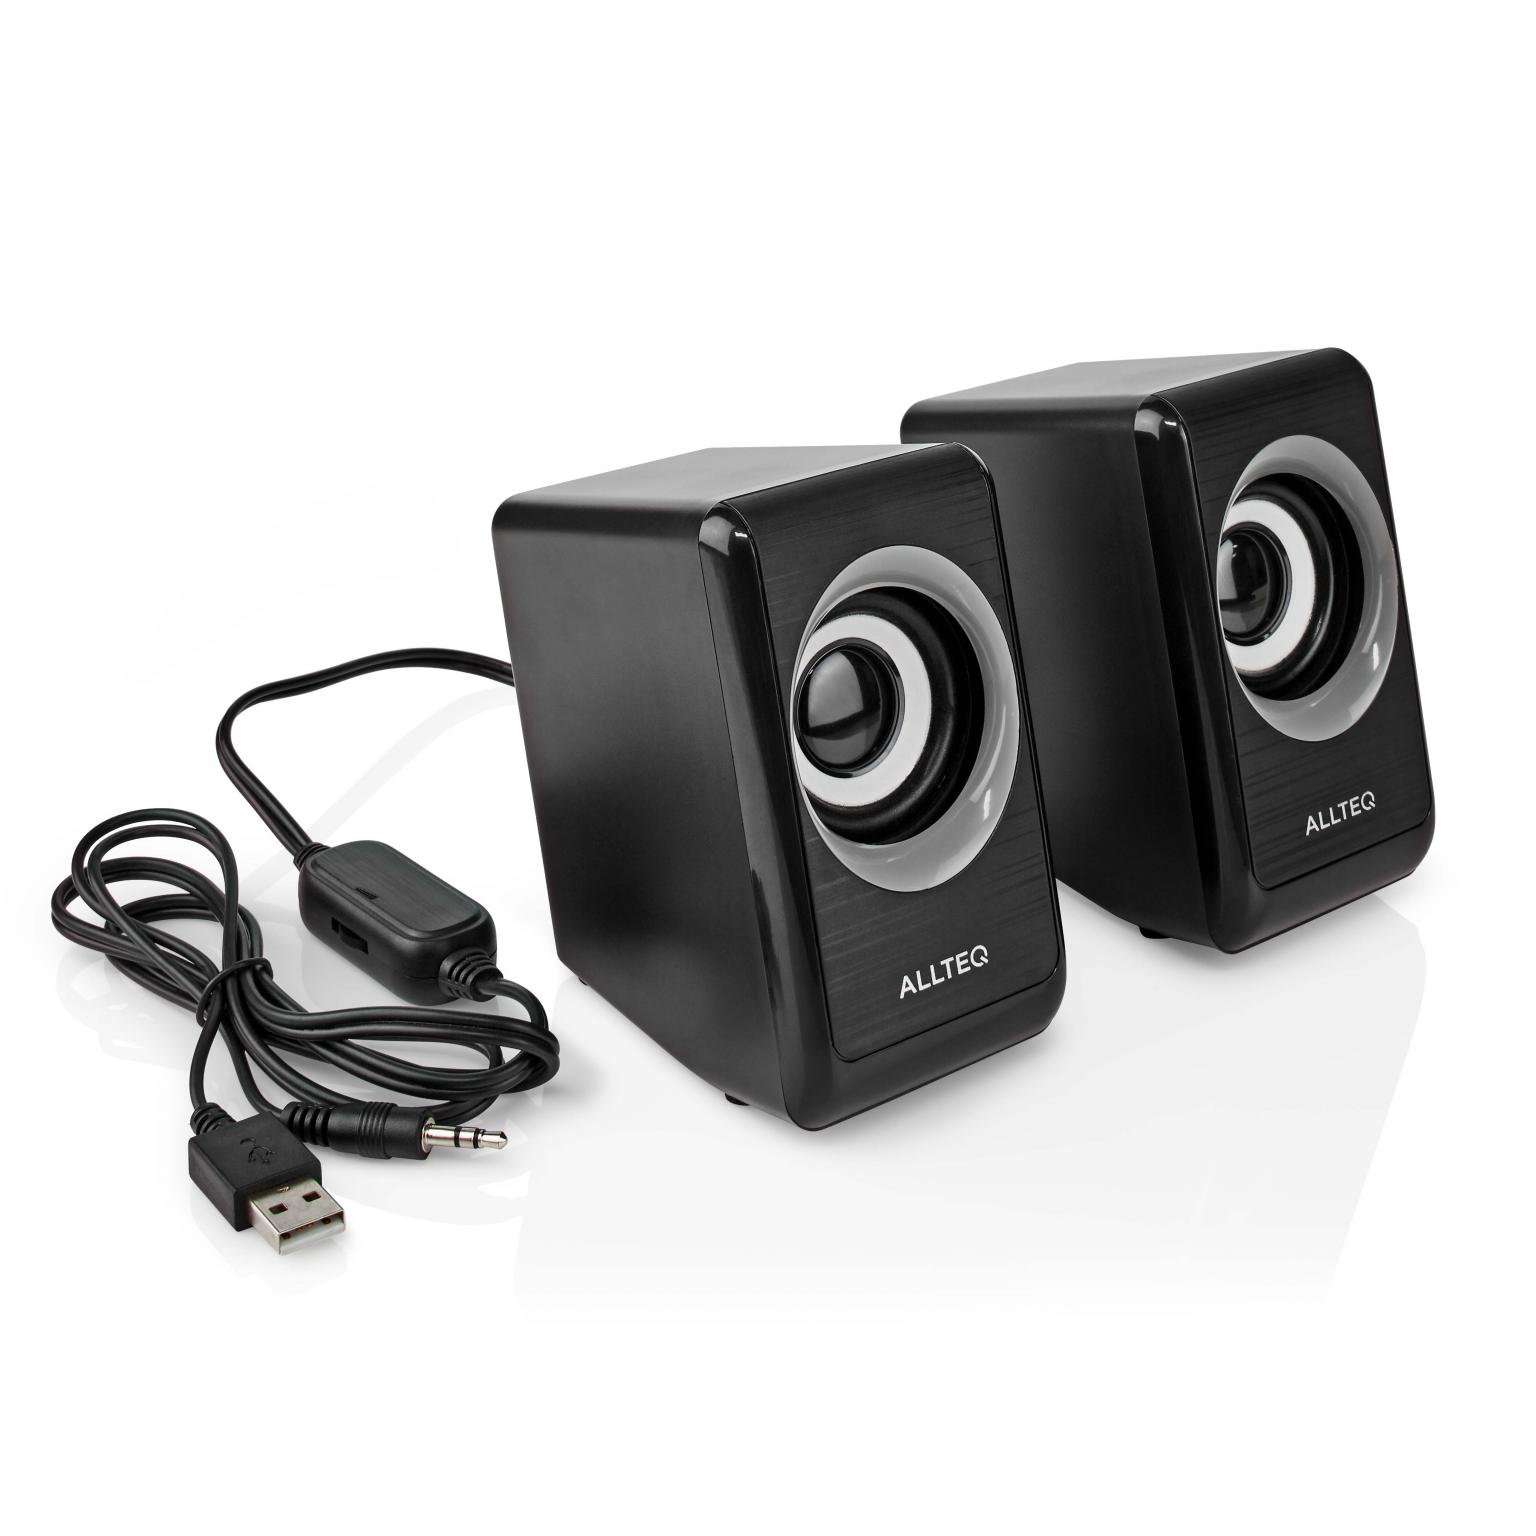 teller Mam ontgrendelen Speaker - Type: PC speaker, Audiokanalen: 2.0, Ingang: Jack 3.5mm male,  Voeding: USB, RMS vermogen: 2x3 Watt.